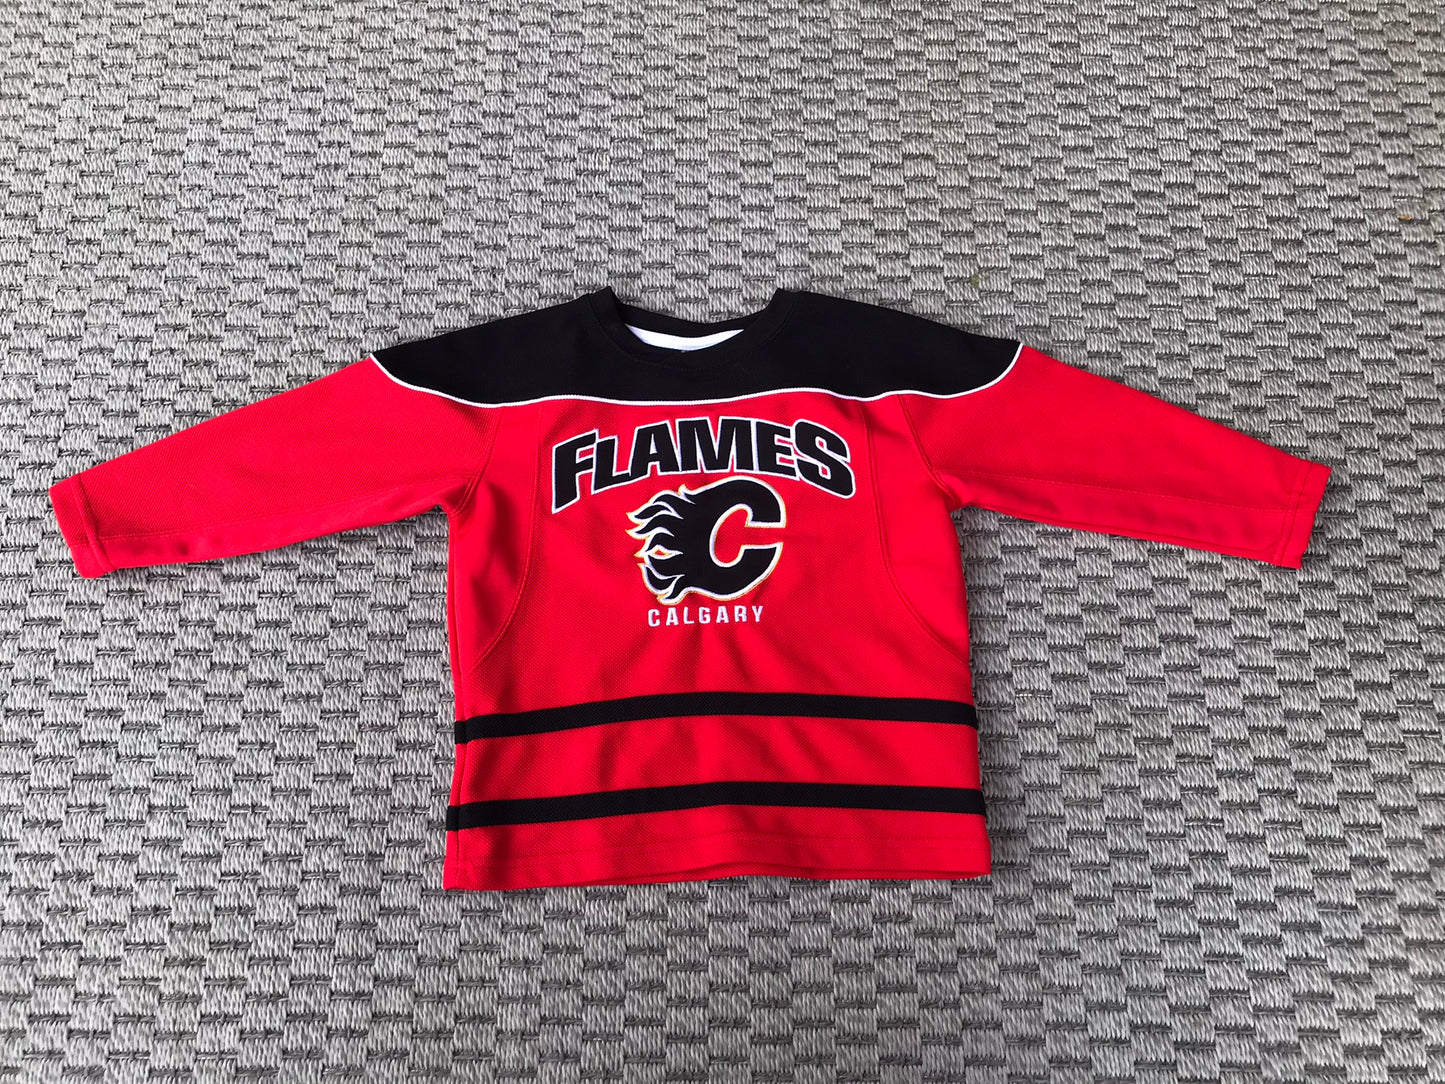 Hockey Jersey Child Size 5 Calgary Flames Red Black Like New